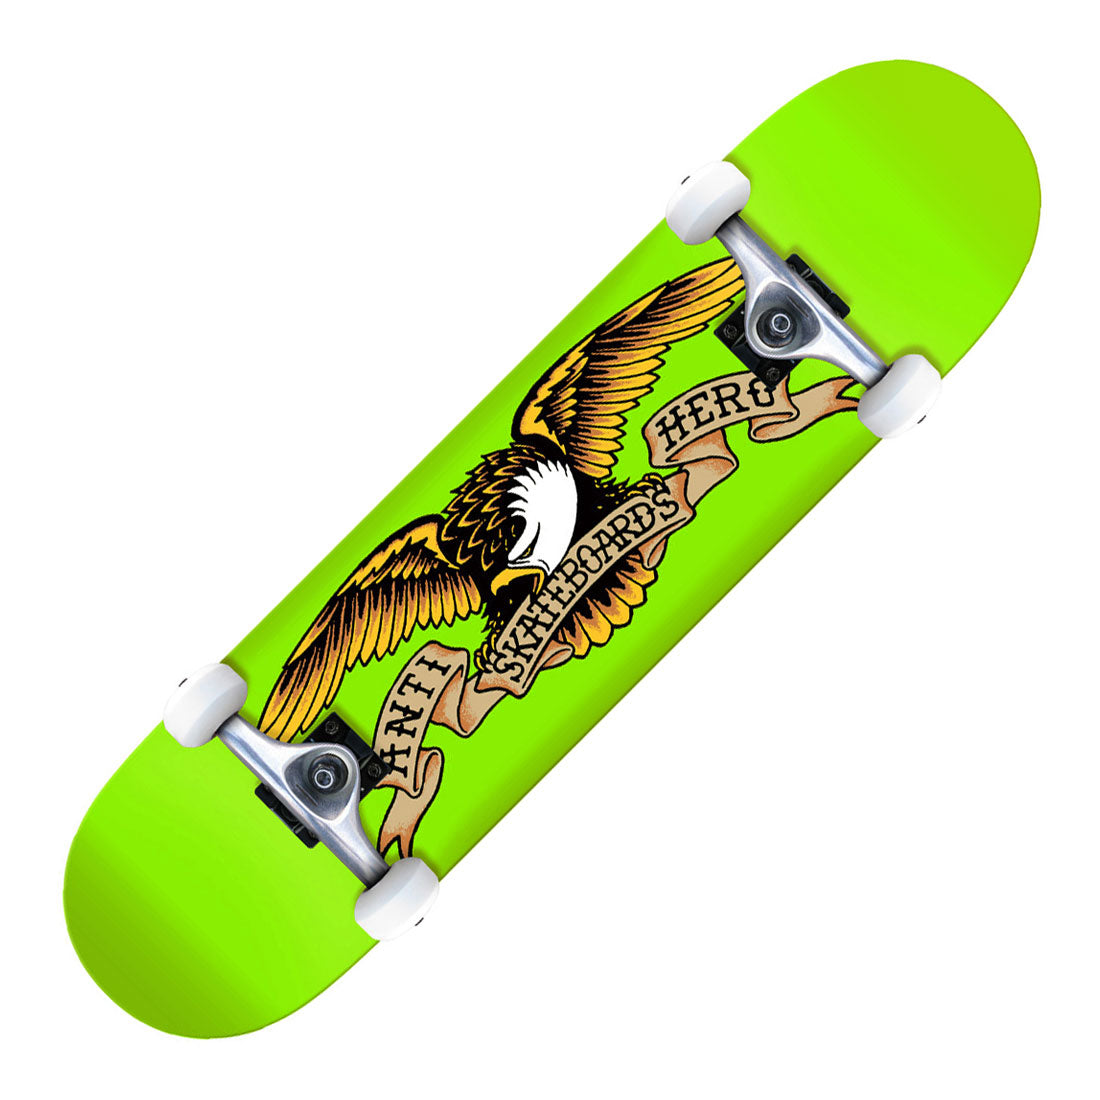 Antihero Classic Eagle 8.0 Complete - Green Skateboard Completes Modern Street